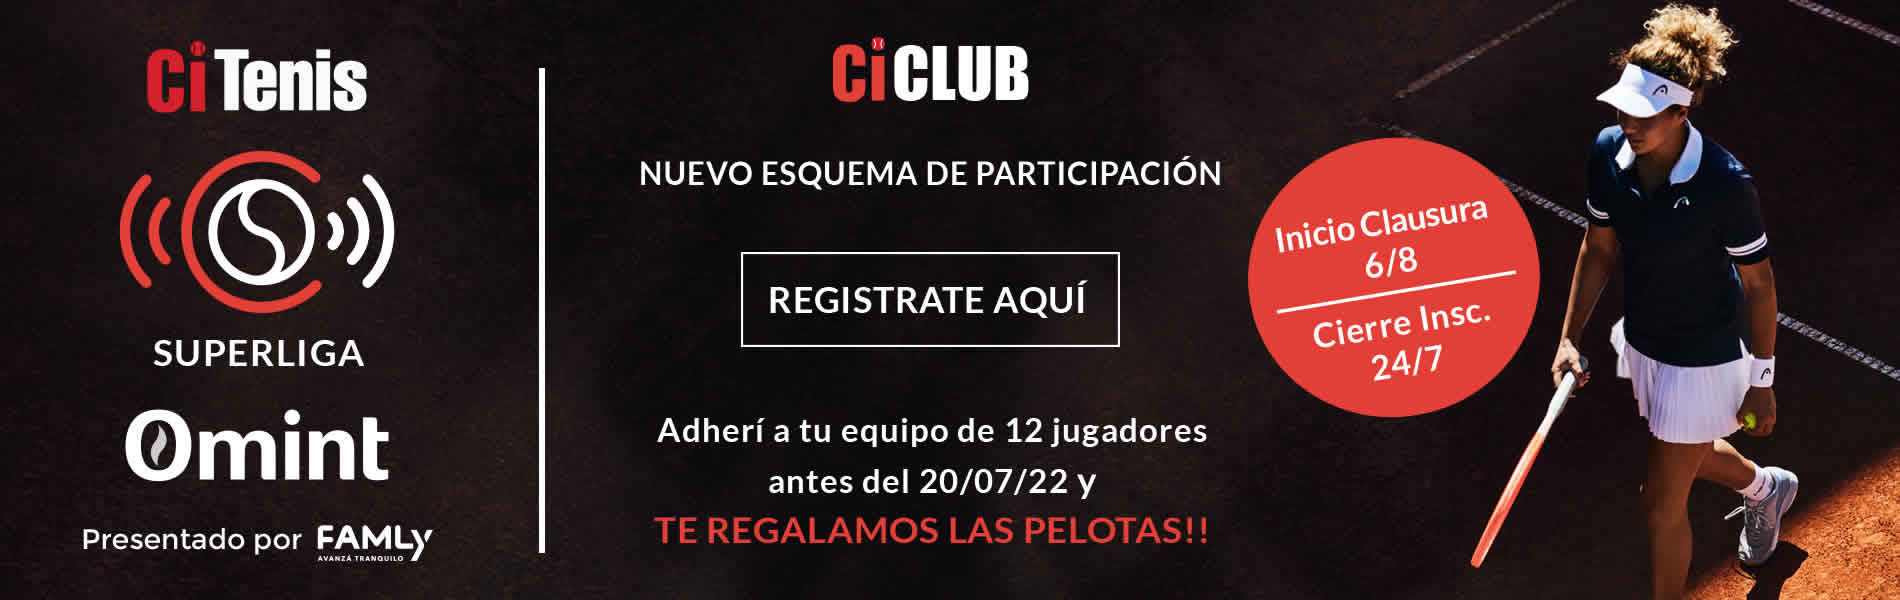 Membresia CiClub